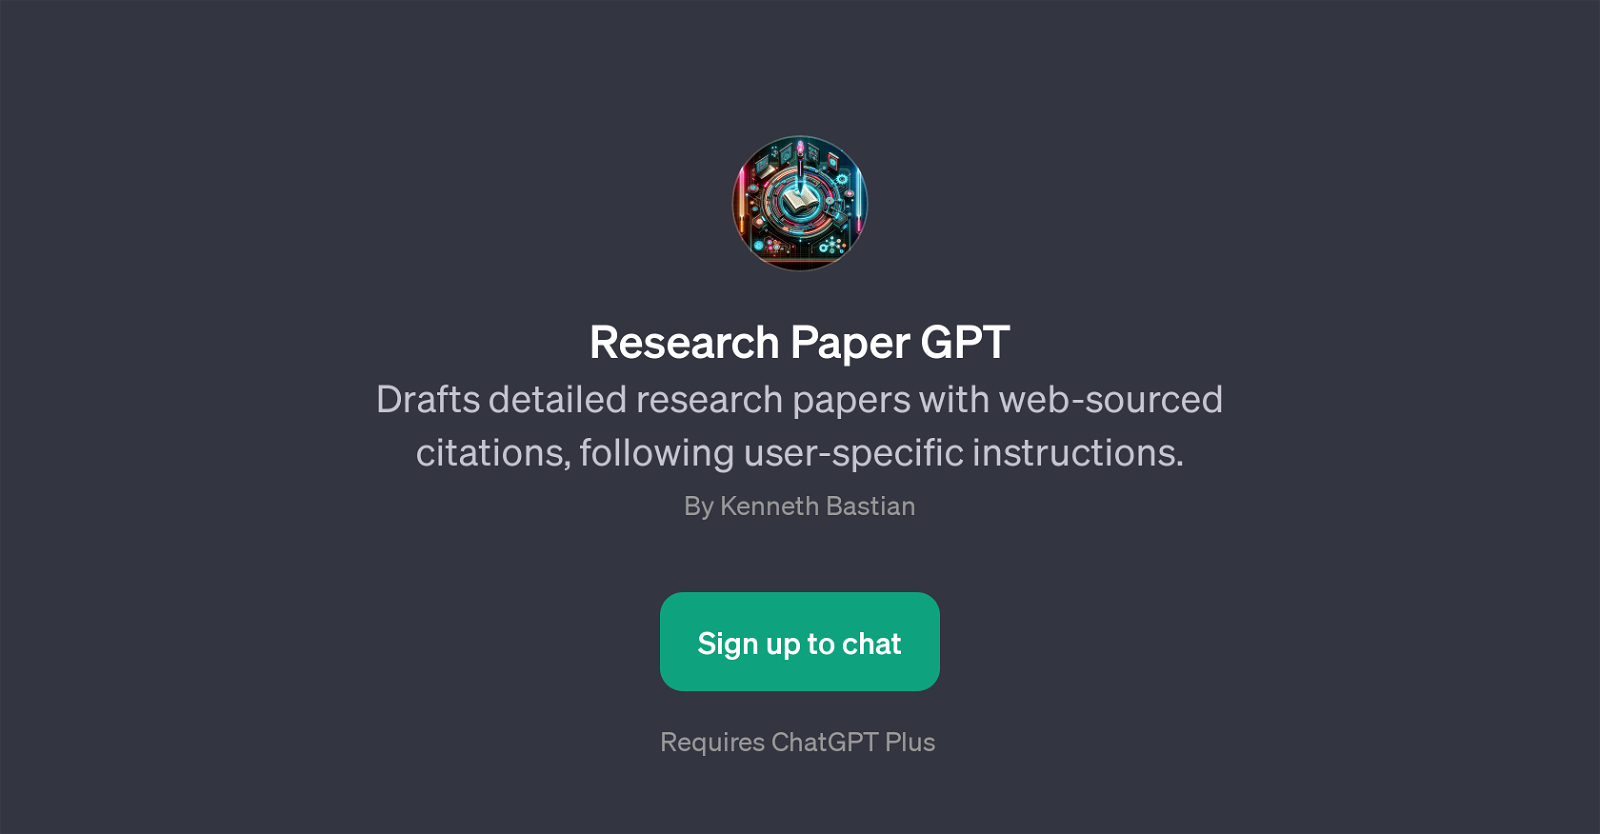 Research Paper GPT website